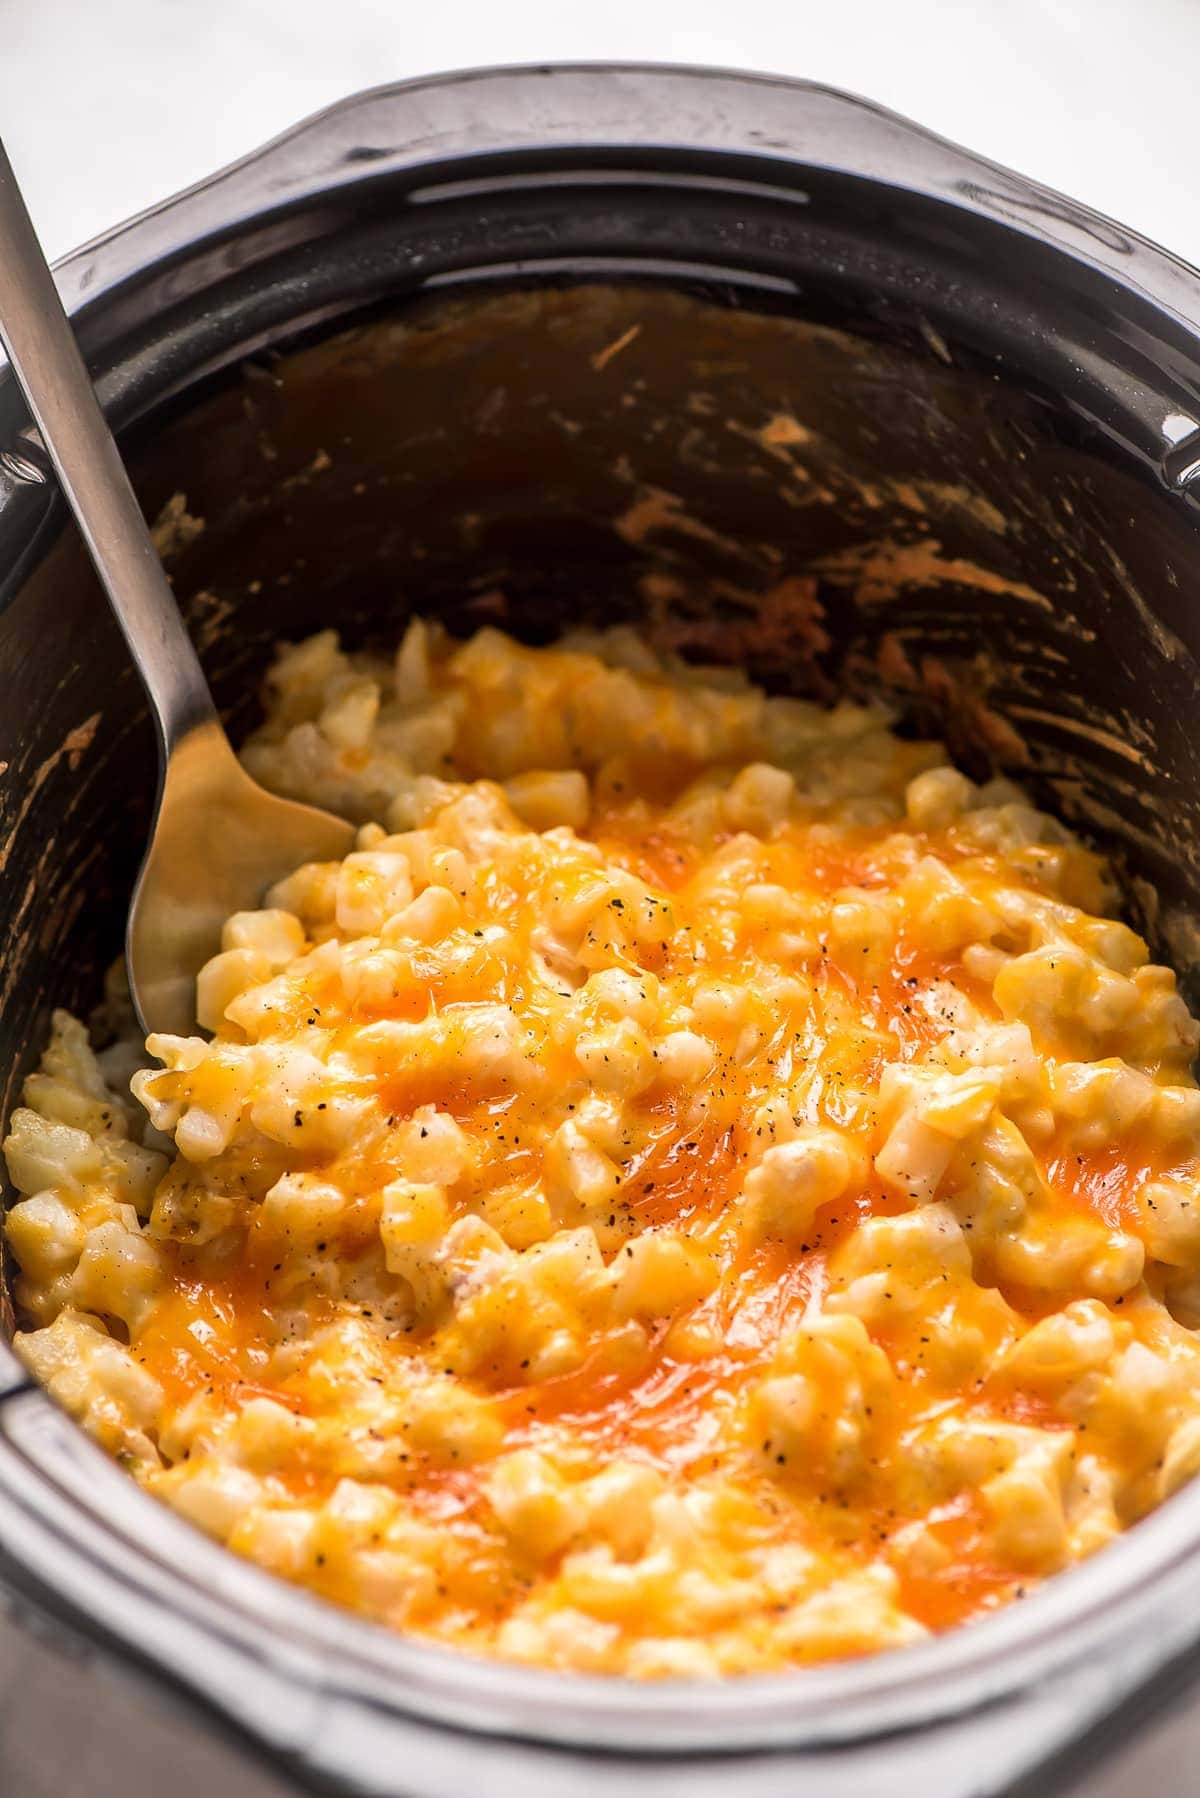 Crockpot cheesy potatoes recipe covered in gooey cheese.